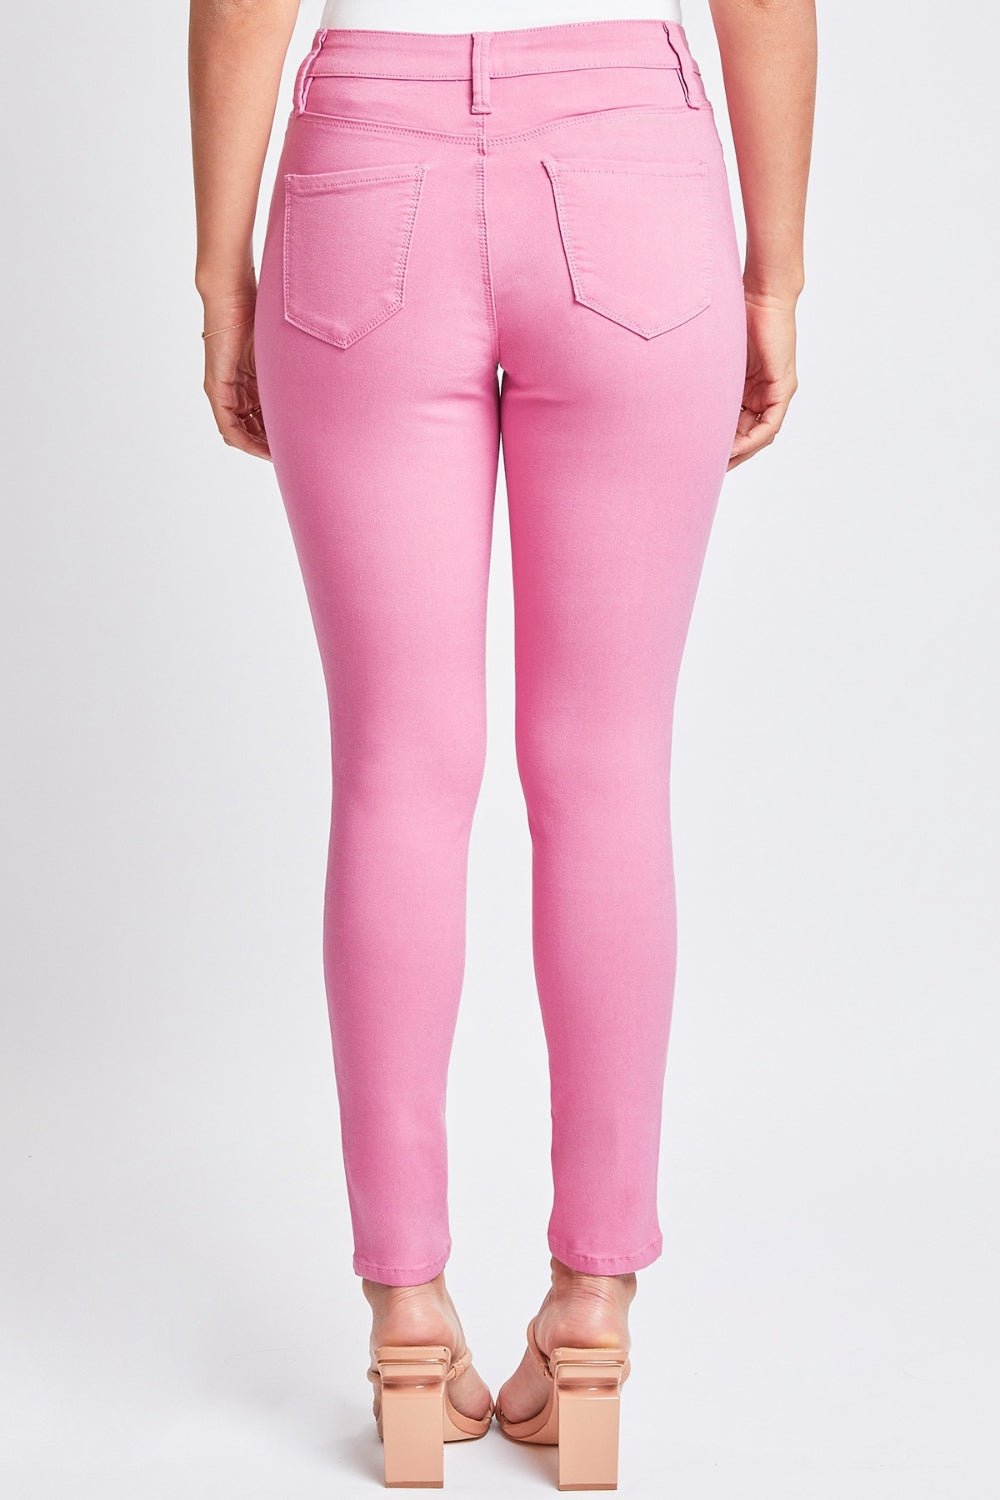 Hyperstretch Mid-Rise Skinny Pants in FlamingoPantsYMI Jeanswear